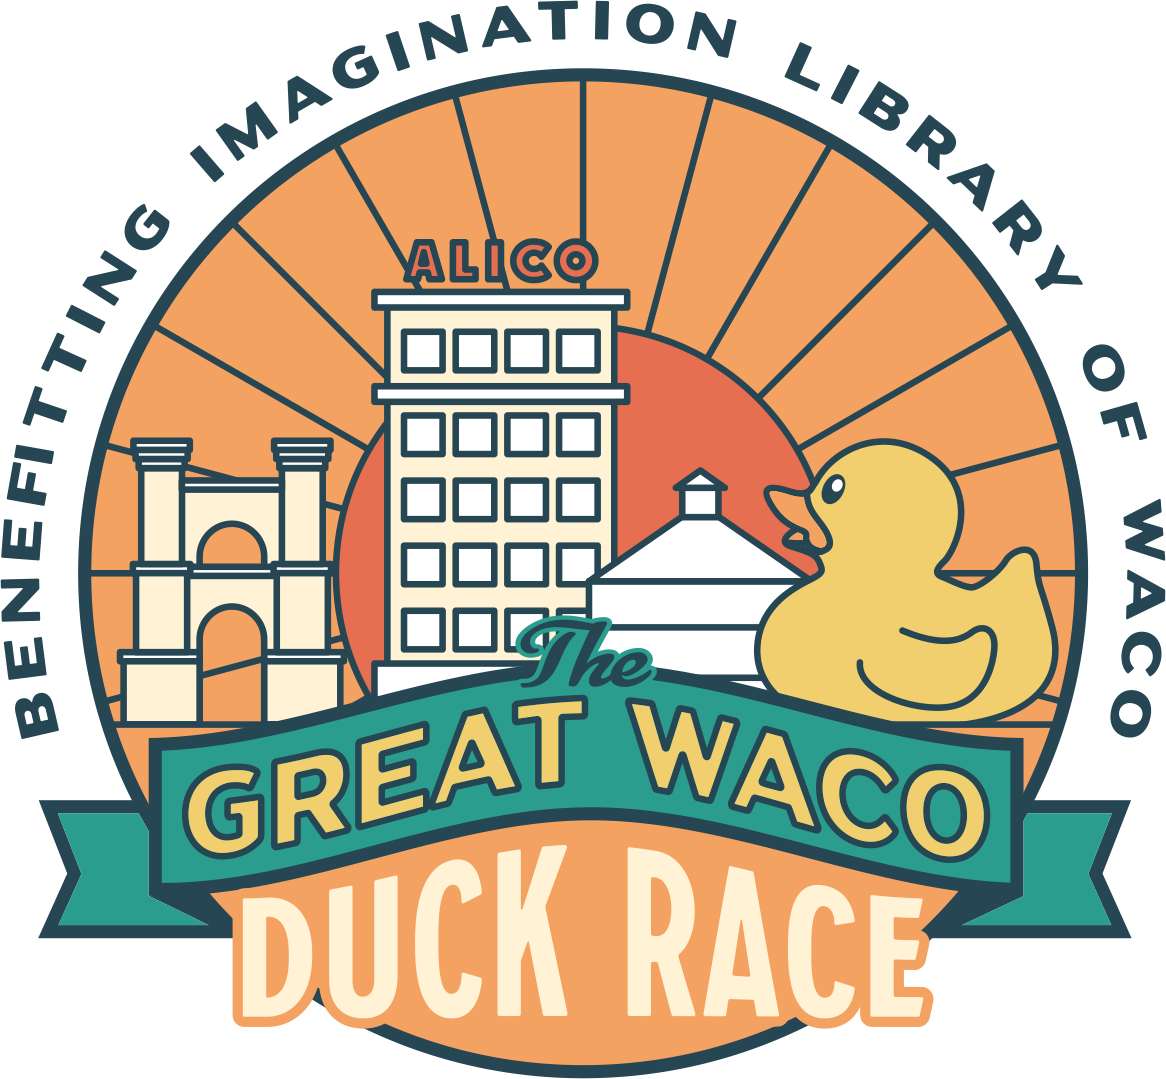 The Great Waco Duck Race